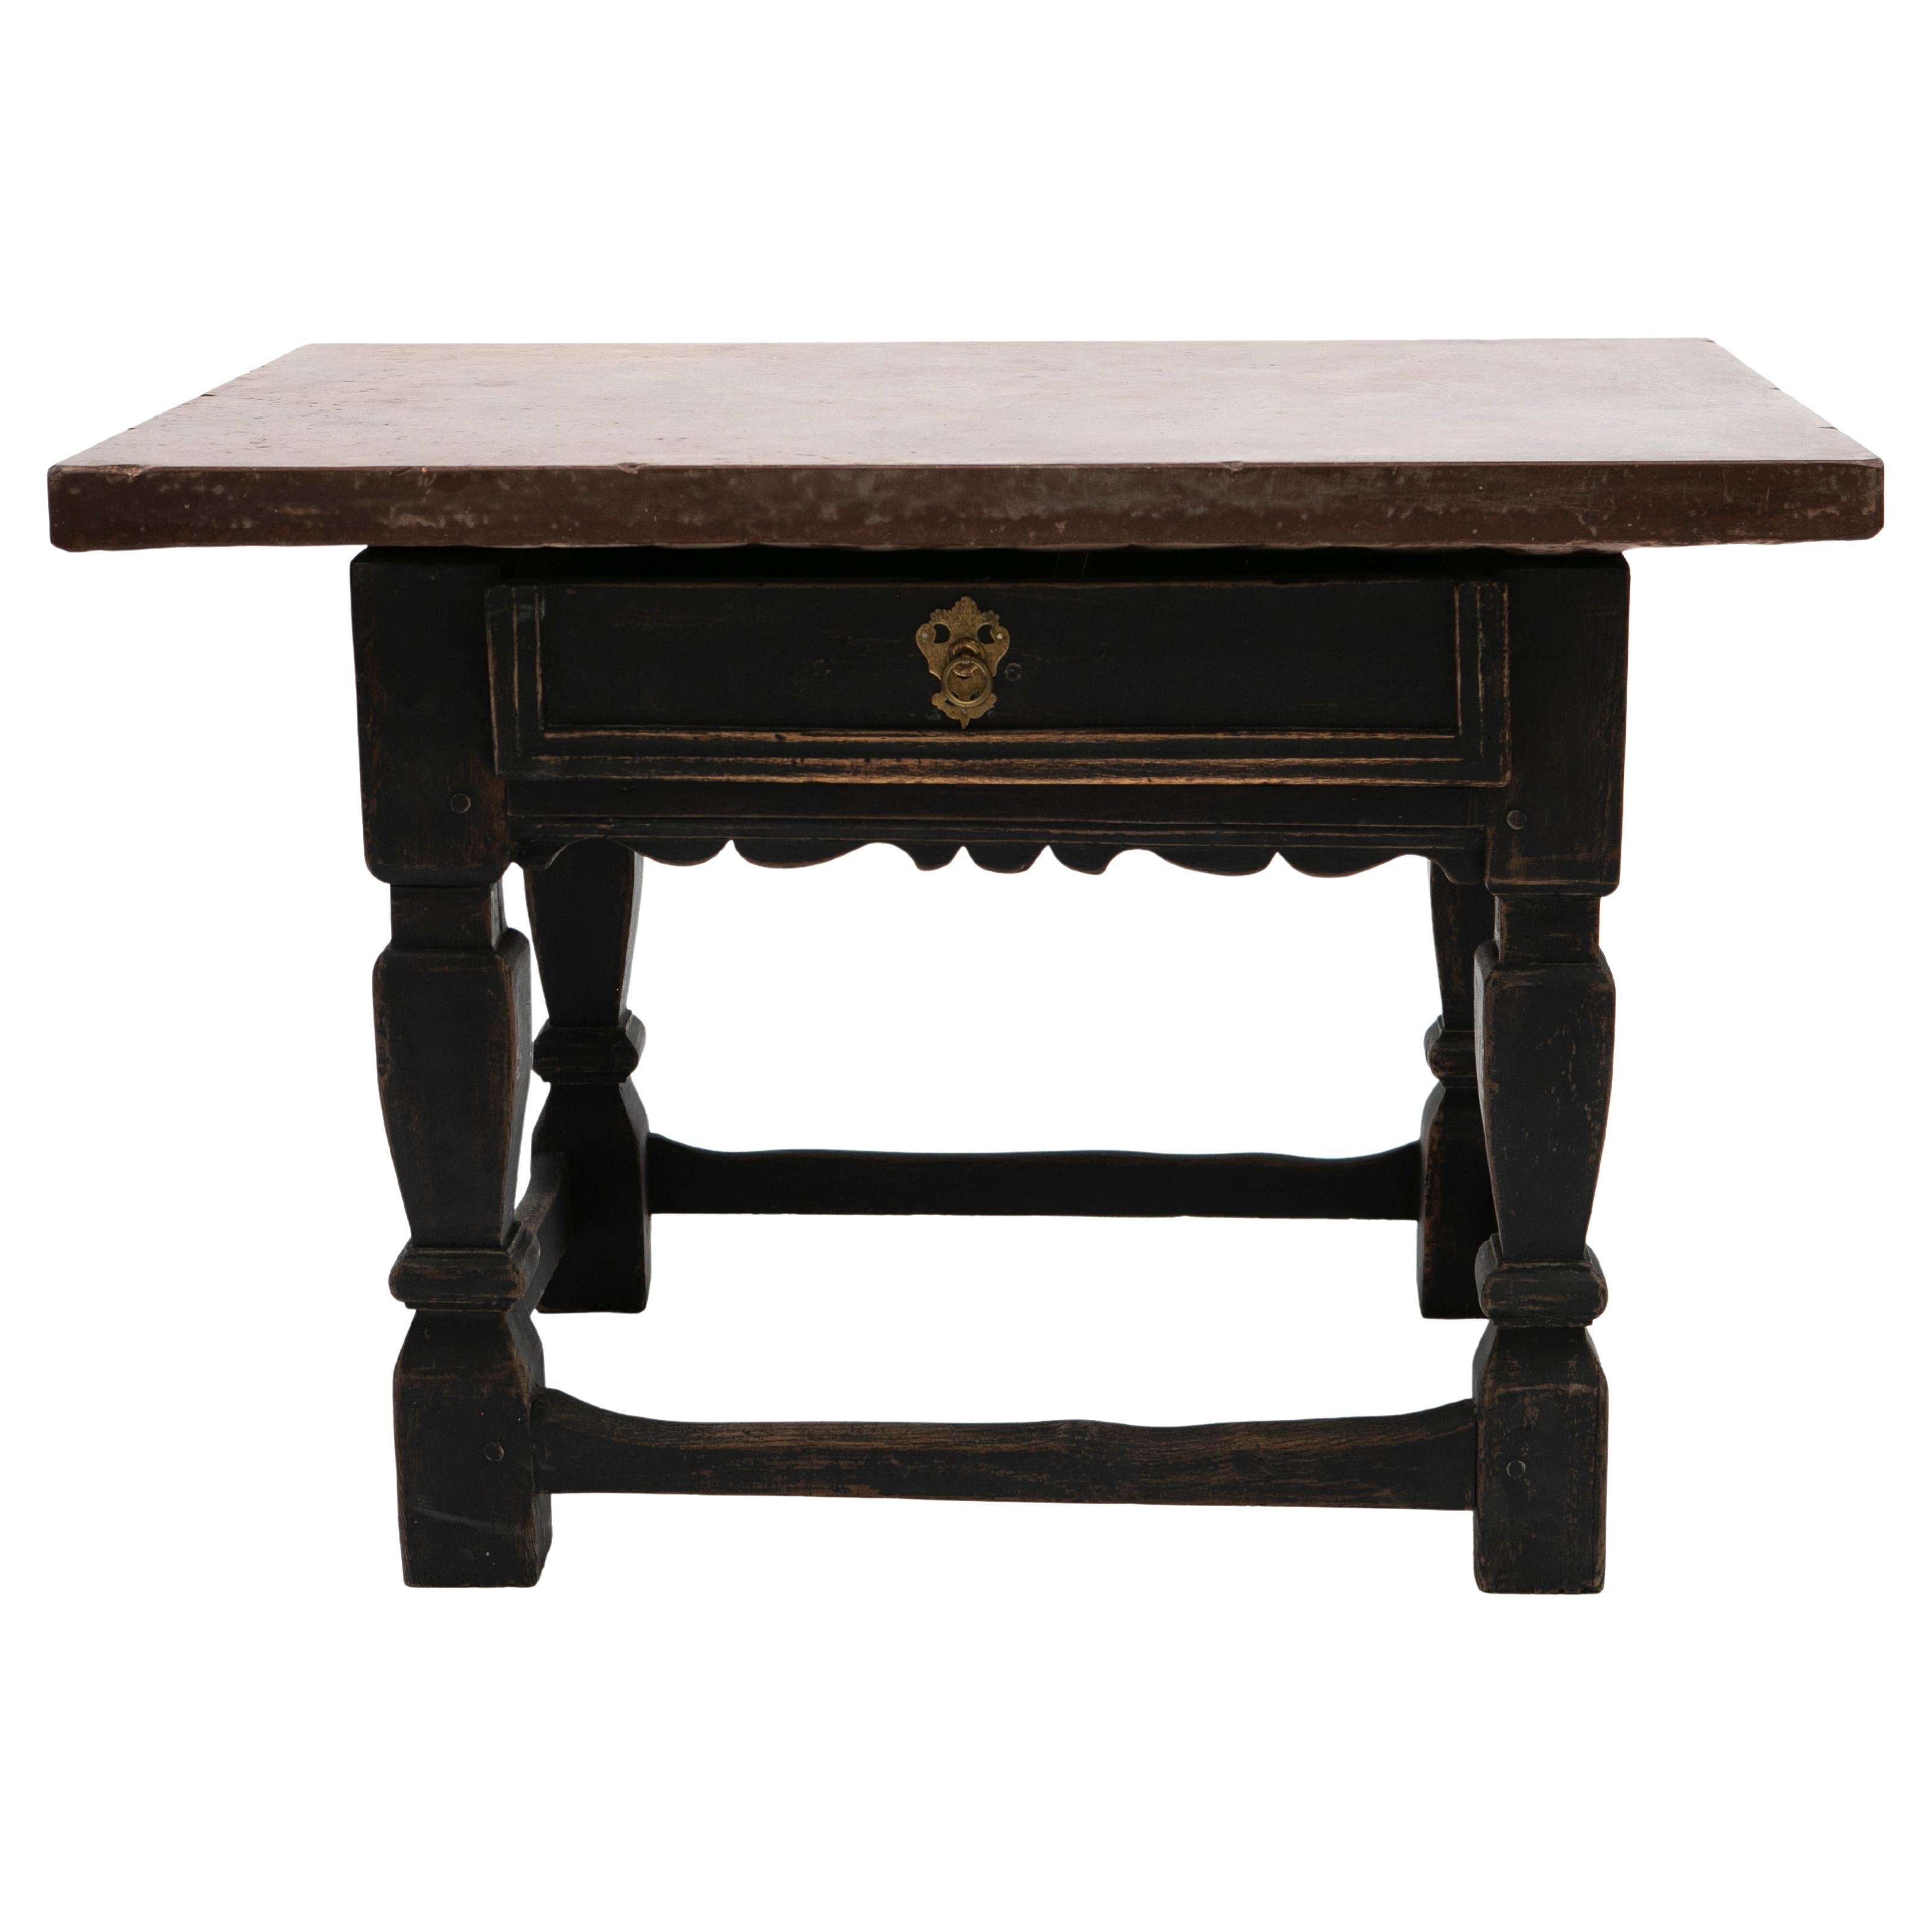 Swedish Baroque Table with Limestone Top